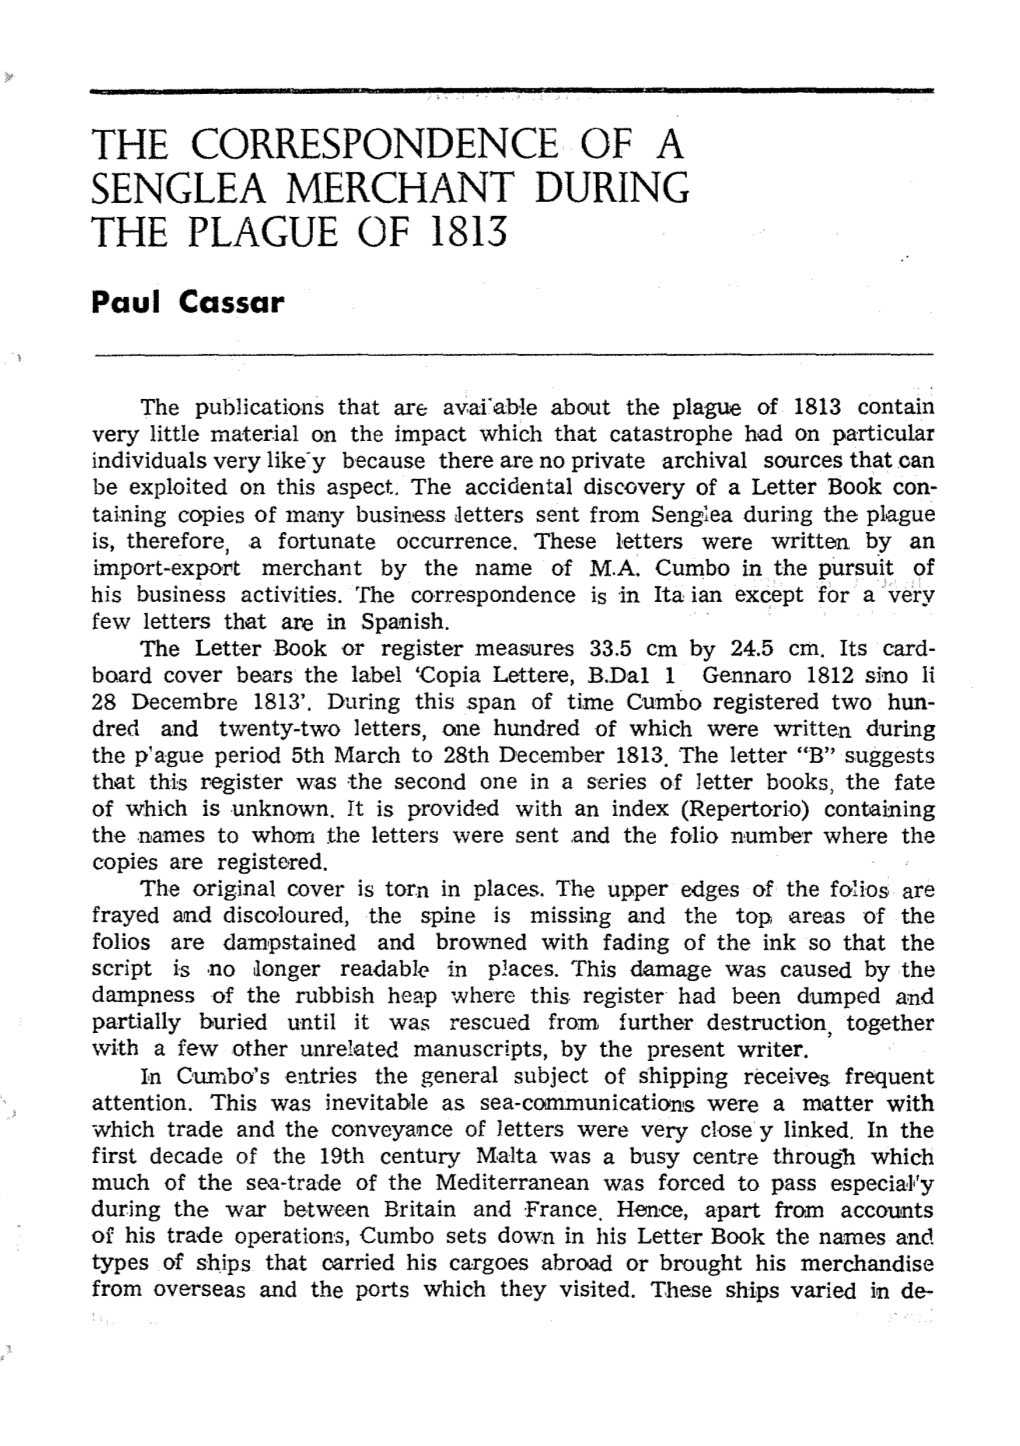 THE CORRESPONDENCE of a SENGLEA MERCHANT DURING the PLAGUE of 1813 Paul Cassar